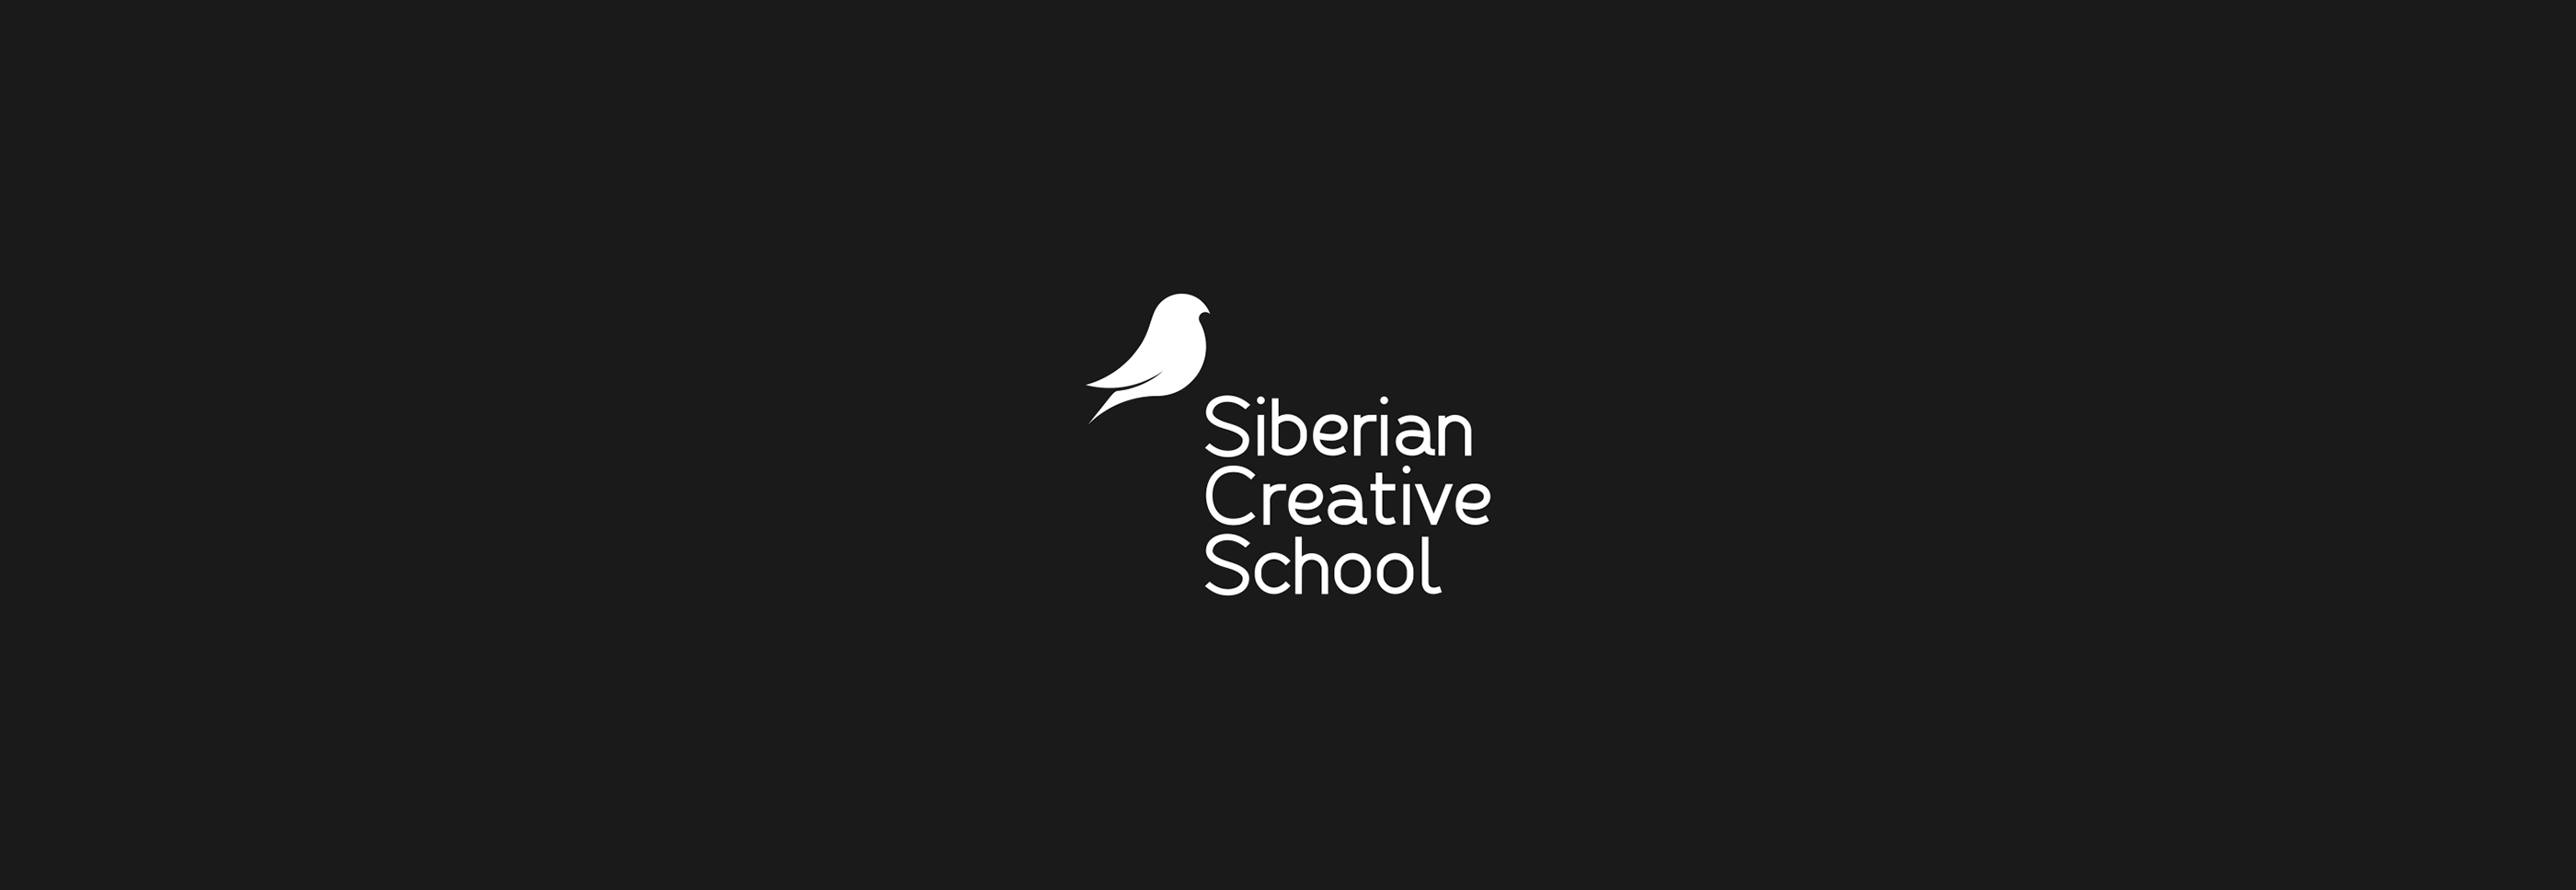 Siberian创意学校品牌形象设计